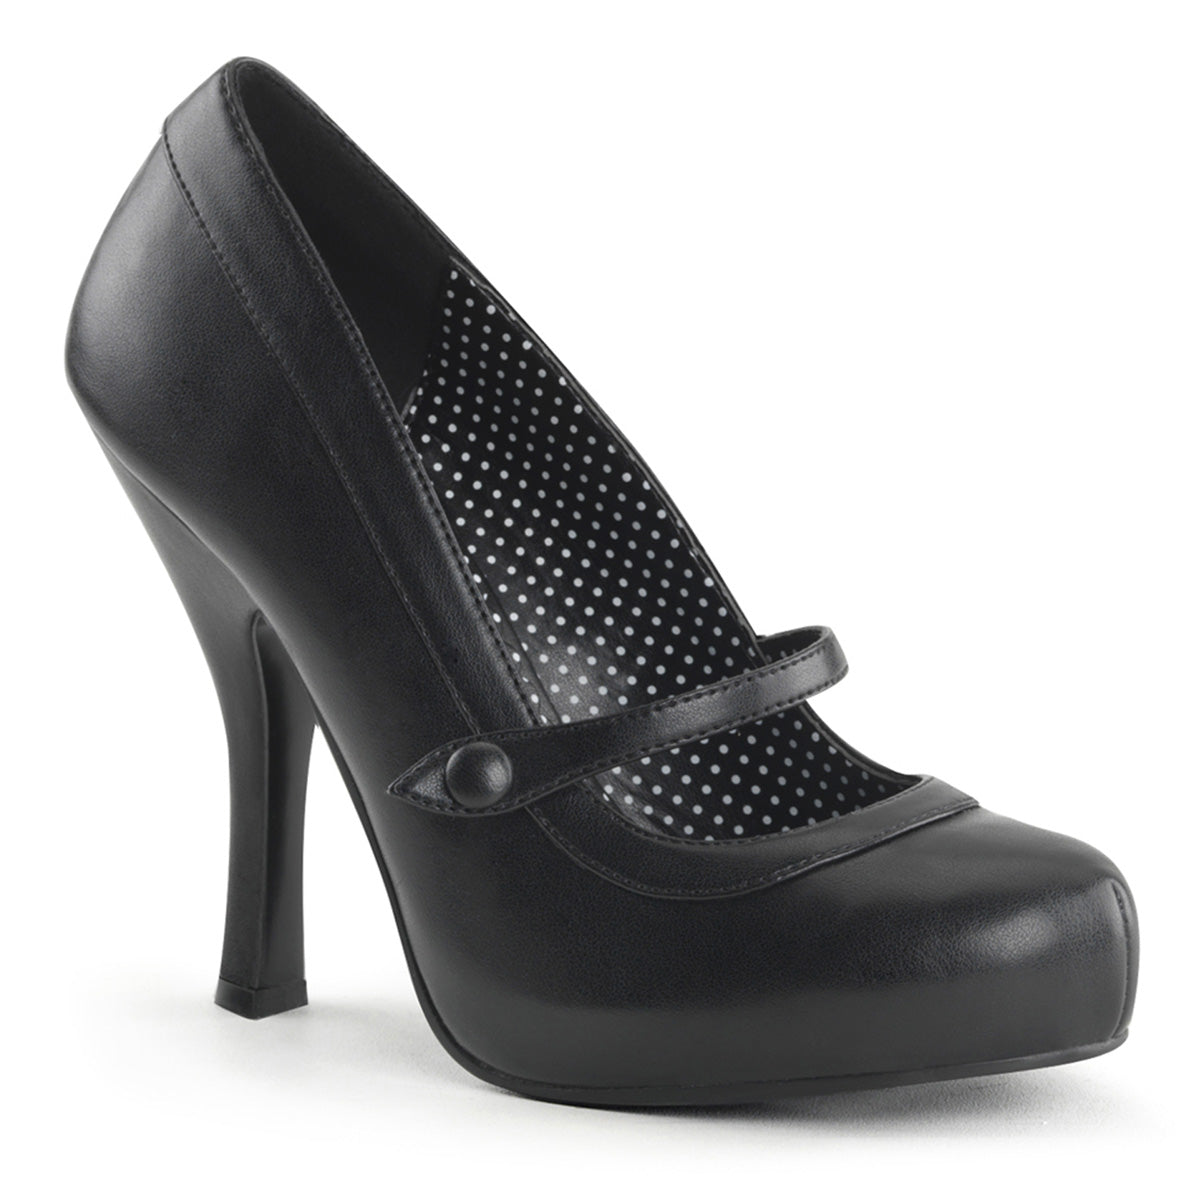 CUTIEPIE-02 Sexy Retro Glamour Heels Black Platform Shoes